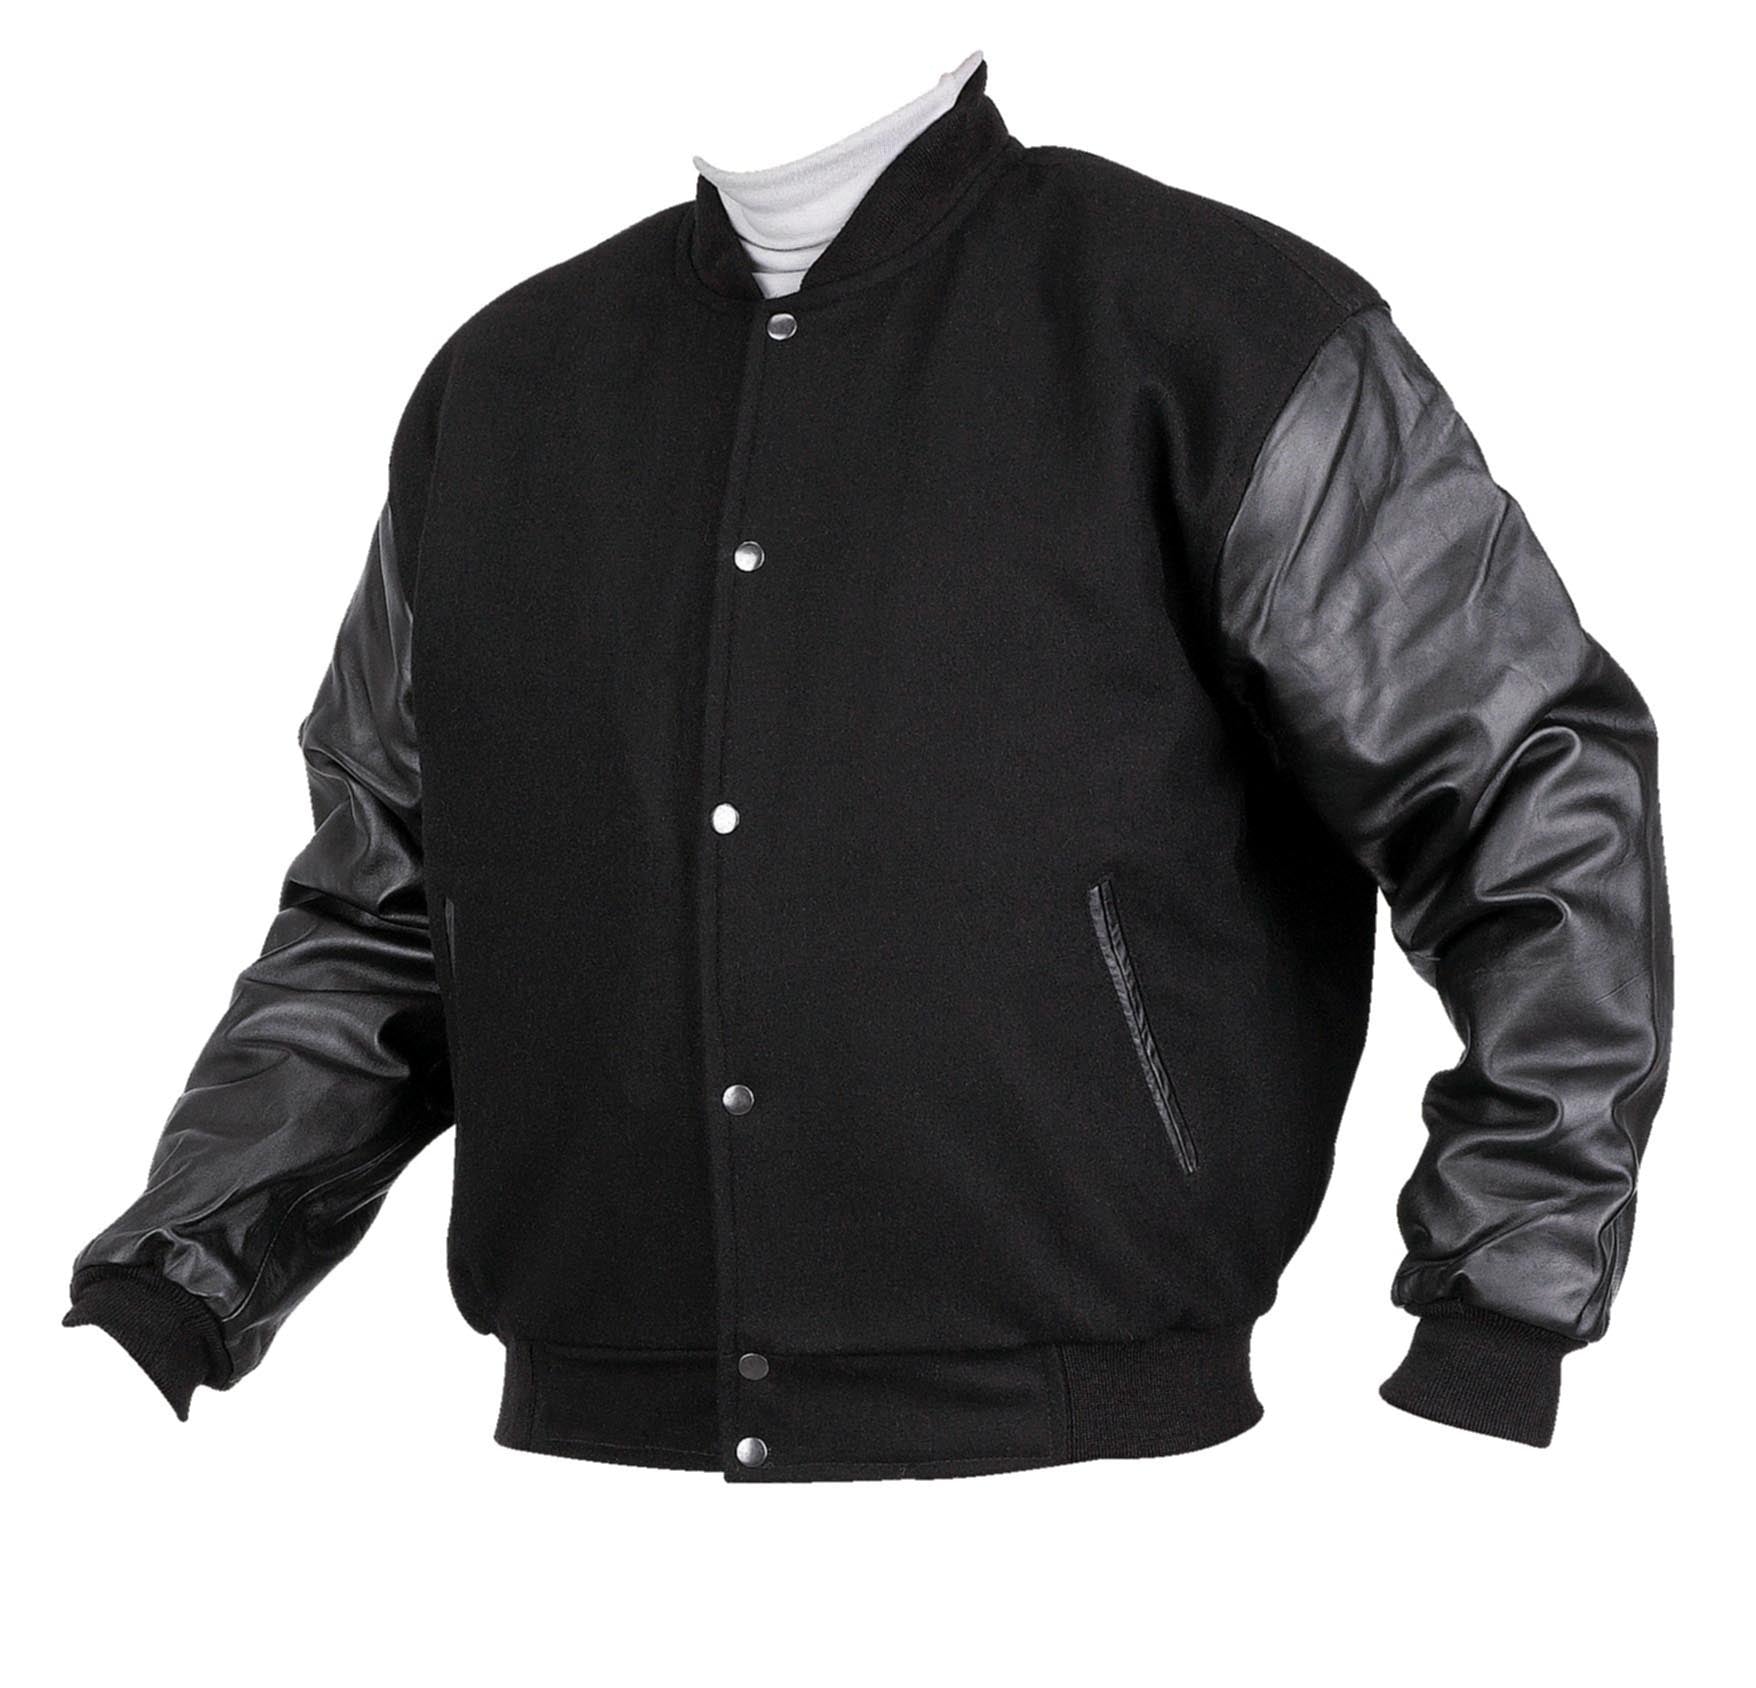 Black Varsity/Baseball Letterman Jacket Wool Body & Leather Sleeves by Pro Rider